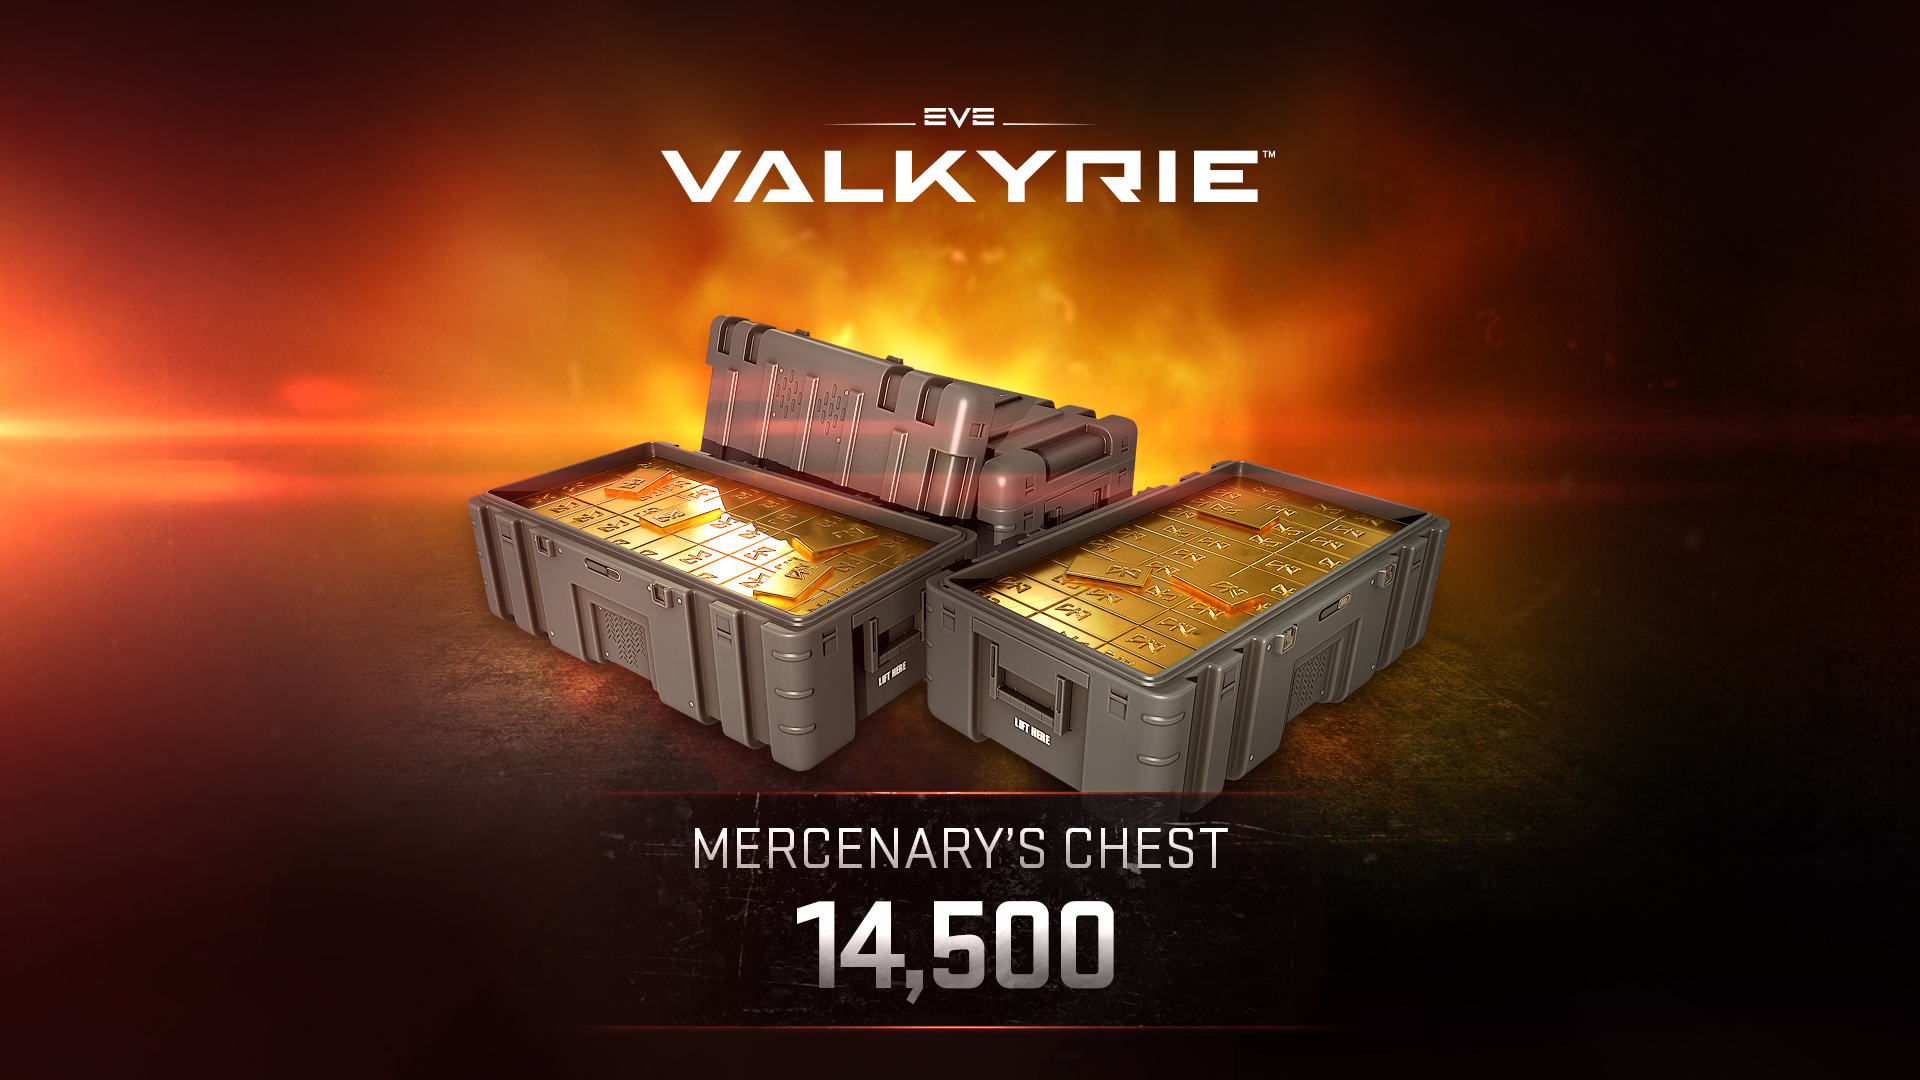 EVE: Valkyrie Mercenaryâ€s Chest screenshot